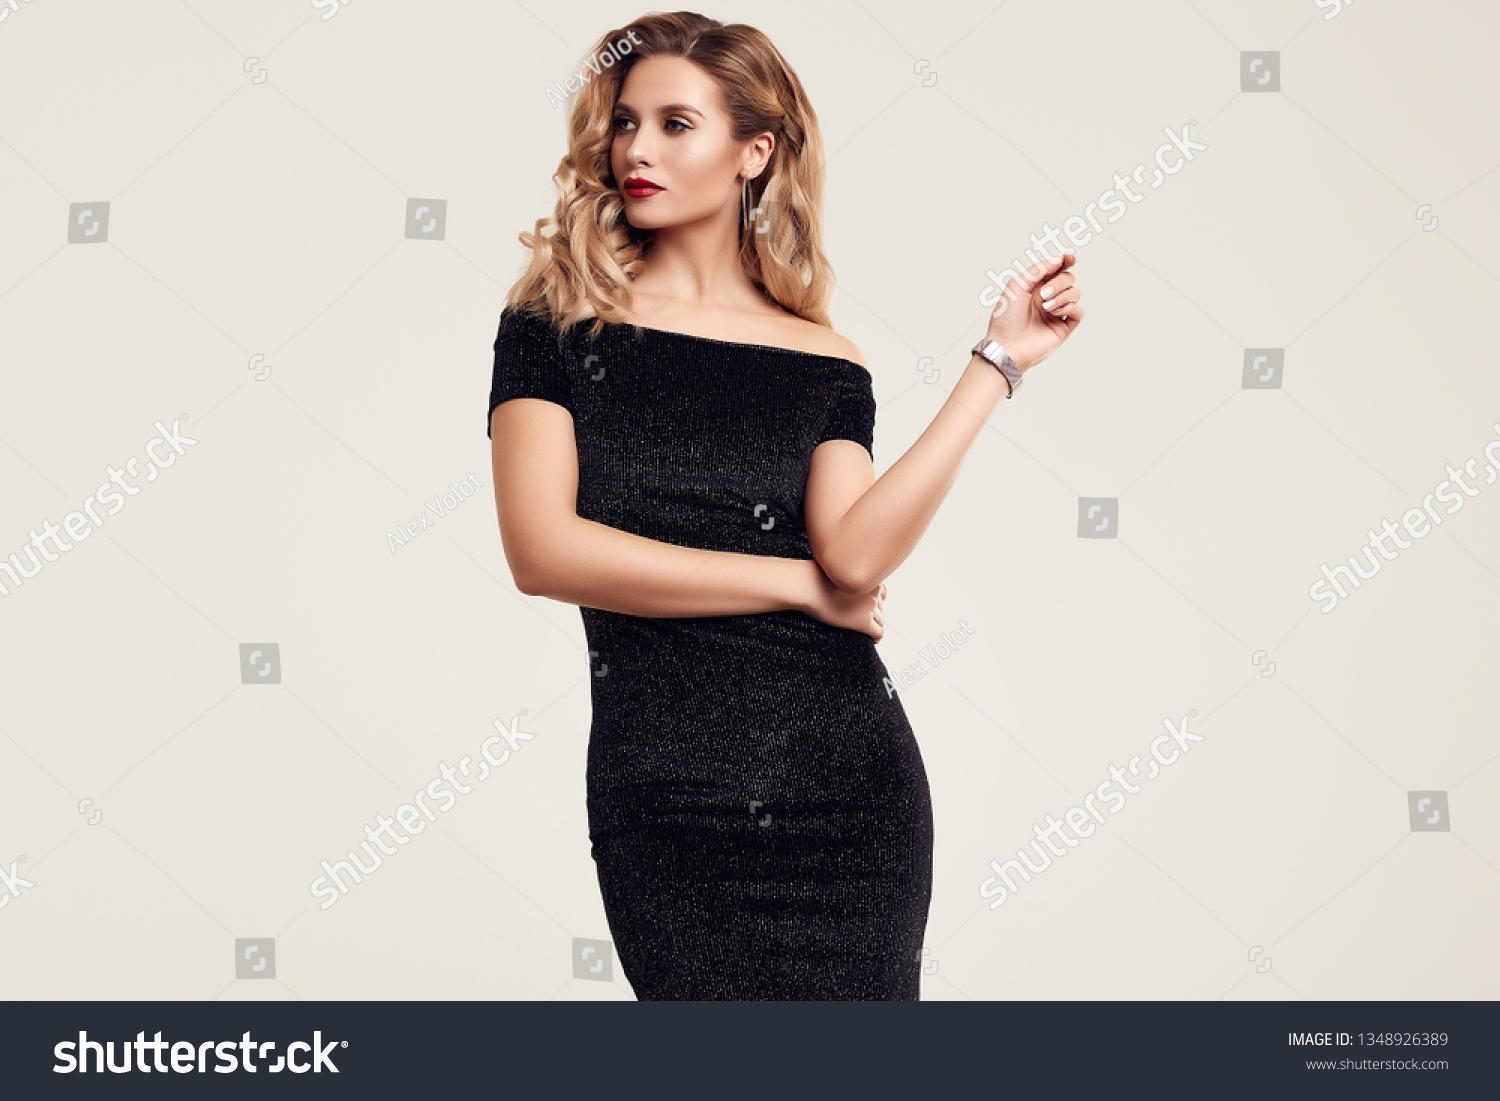 Portrait of gorgeous elegant sensual blonde woman wearing fashion black dress isolated on white background #1348926389